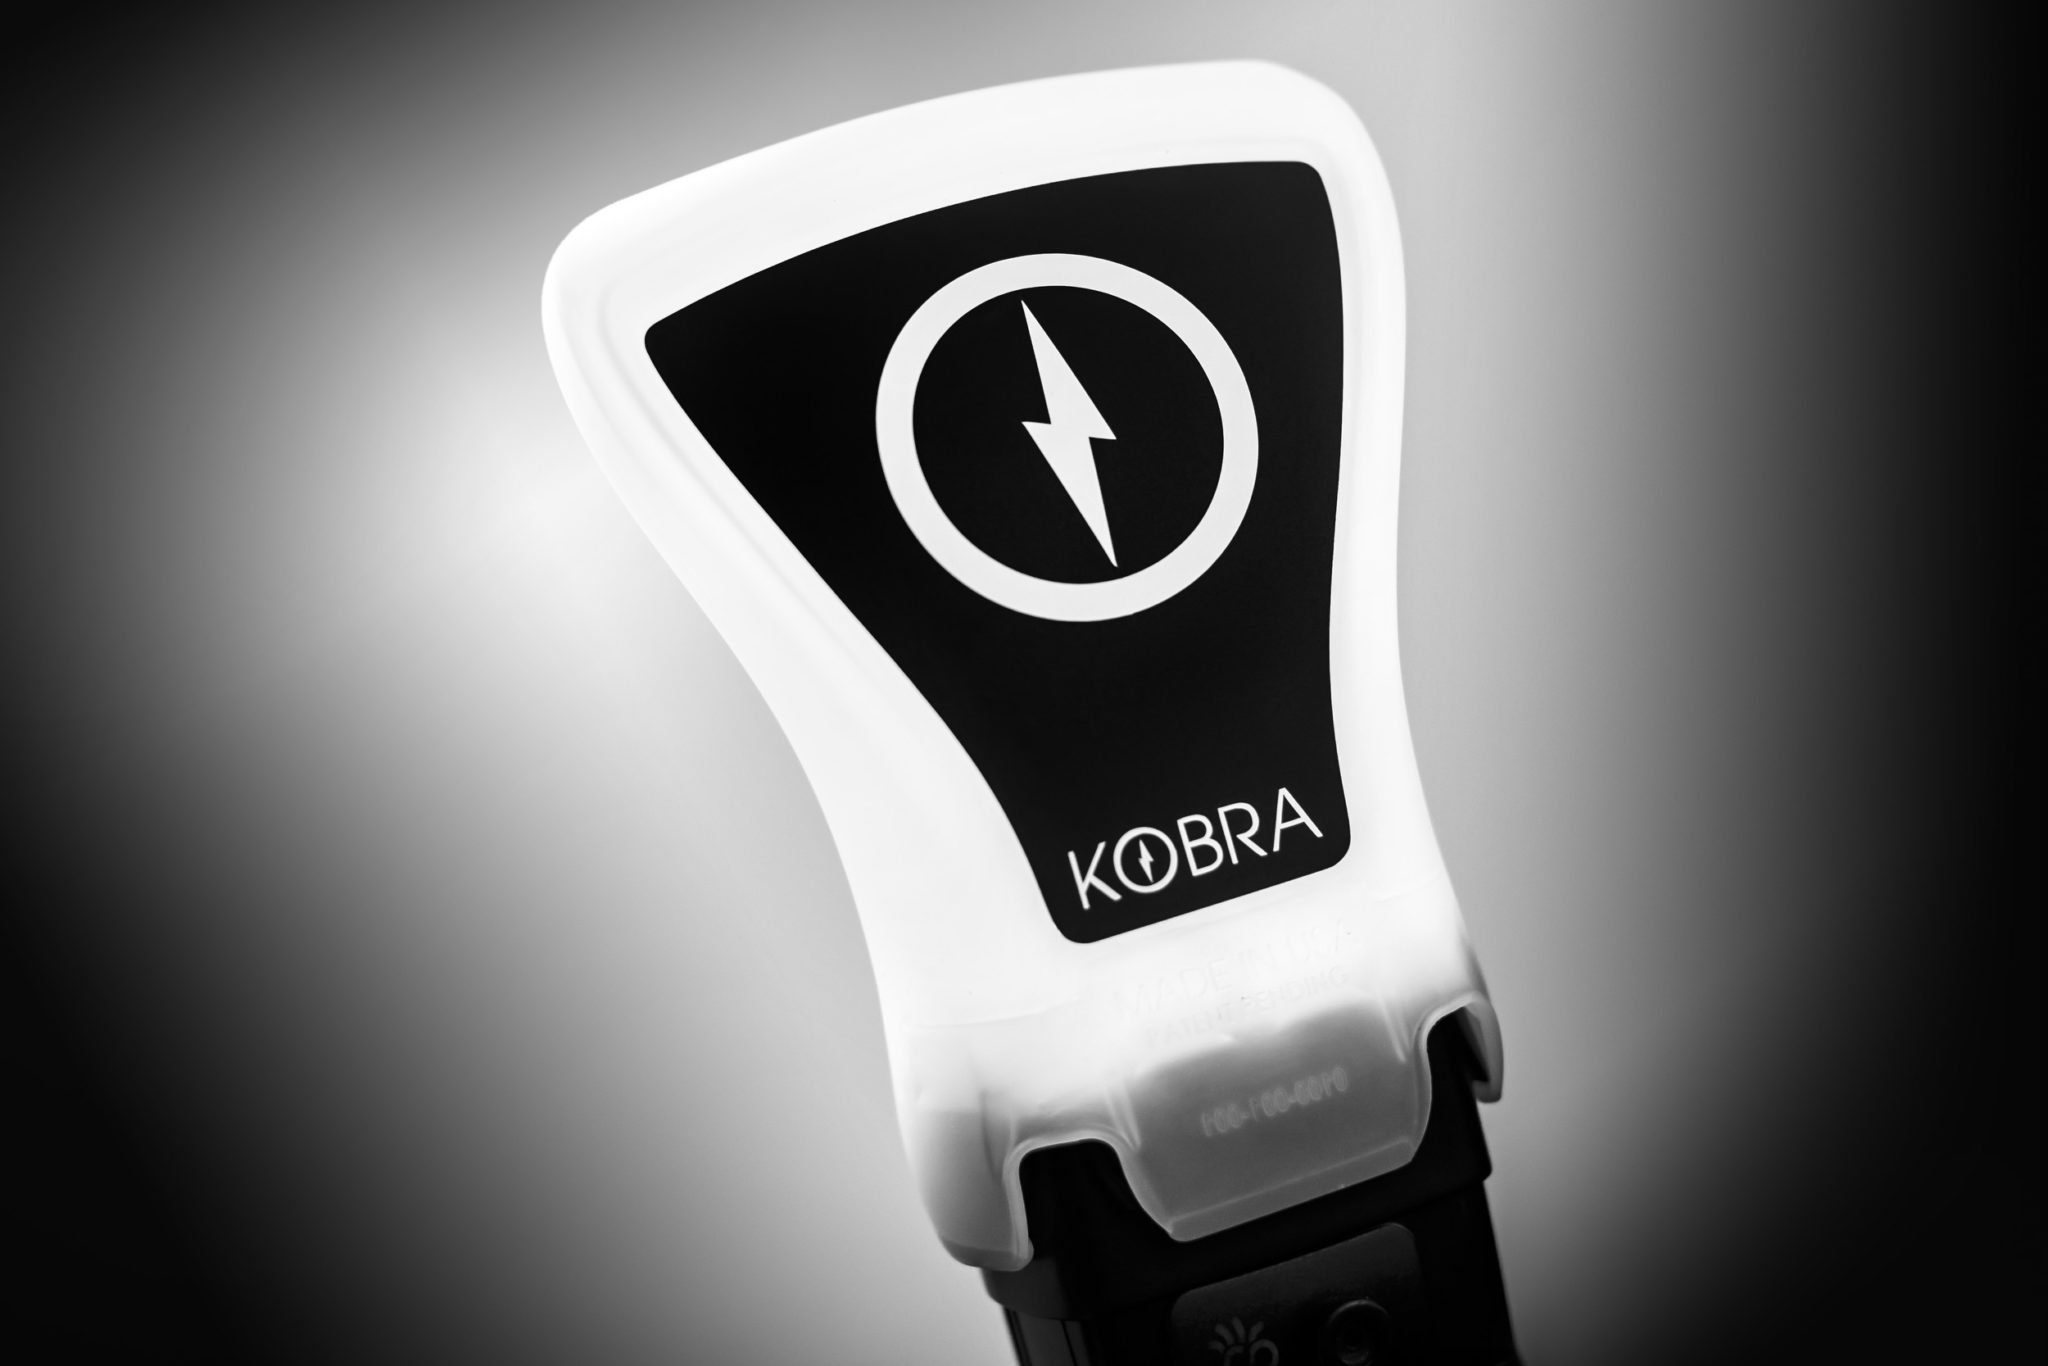 The Kobra: A Gary Fong Lightsphere Variant Looking For $125,000 on Kickstarter